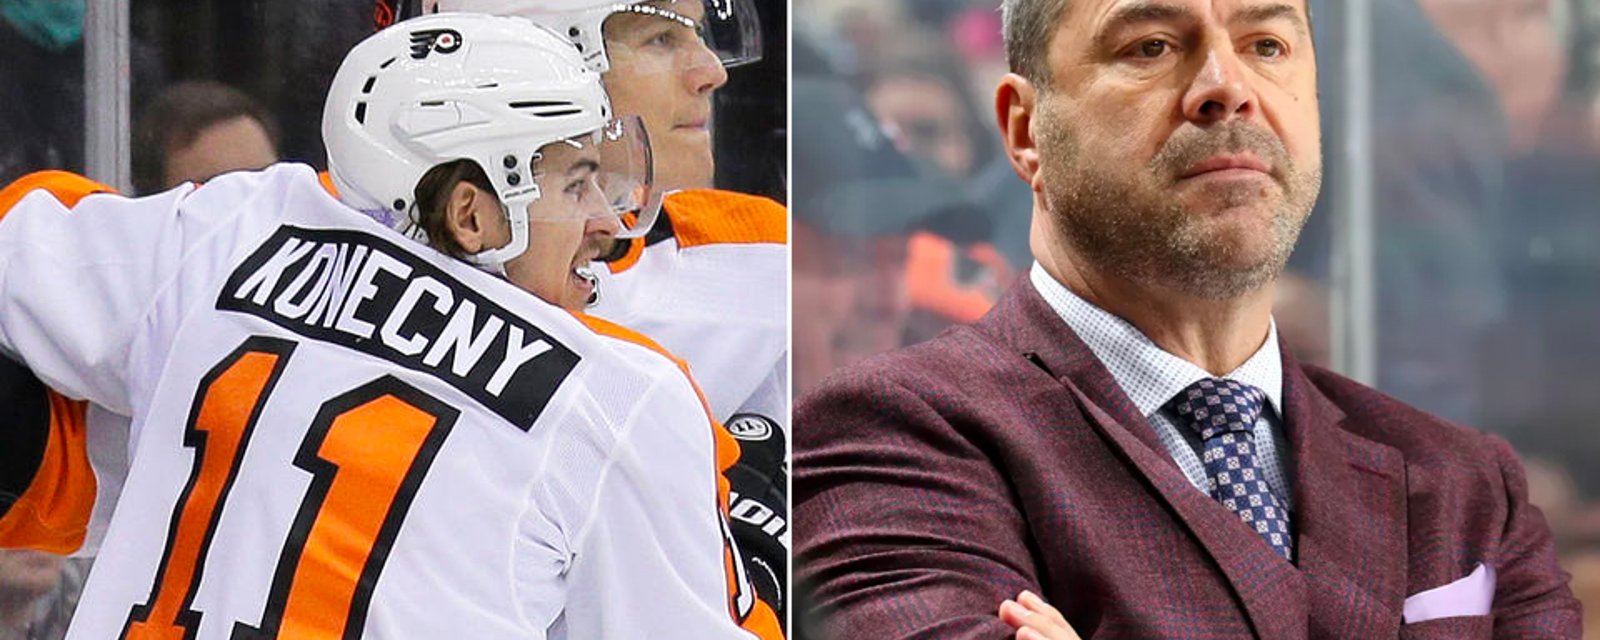 Feud erupts between Flyers’ HC Vigneault and star player Konecny